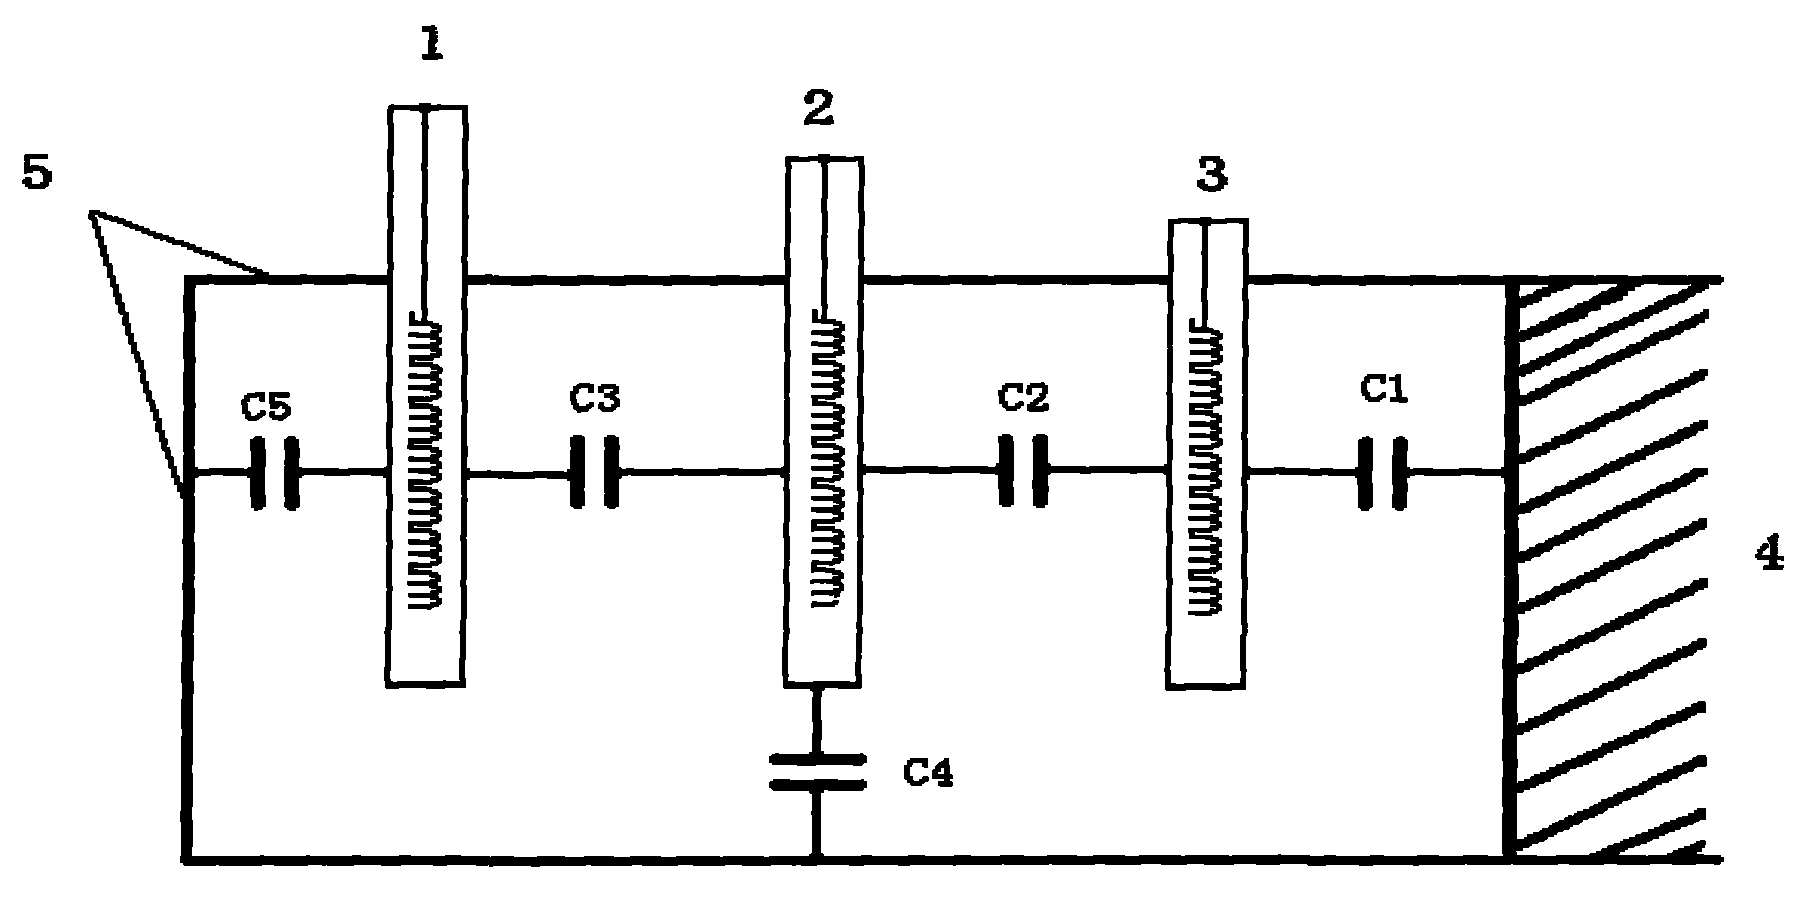 Dielectric-capacitance testing method of deformation degree of transformer winding